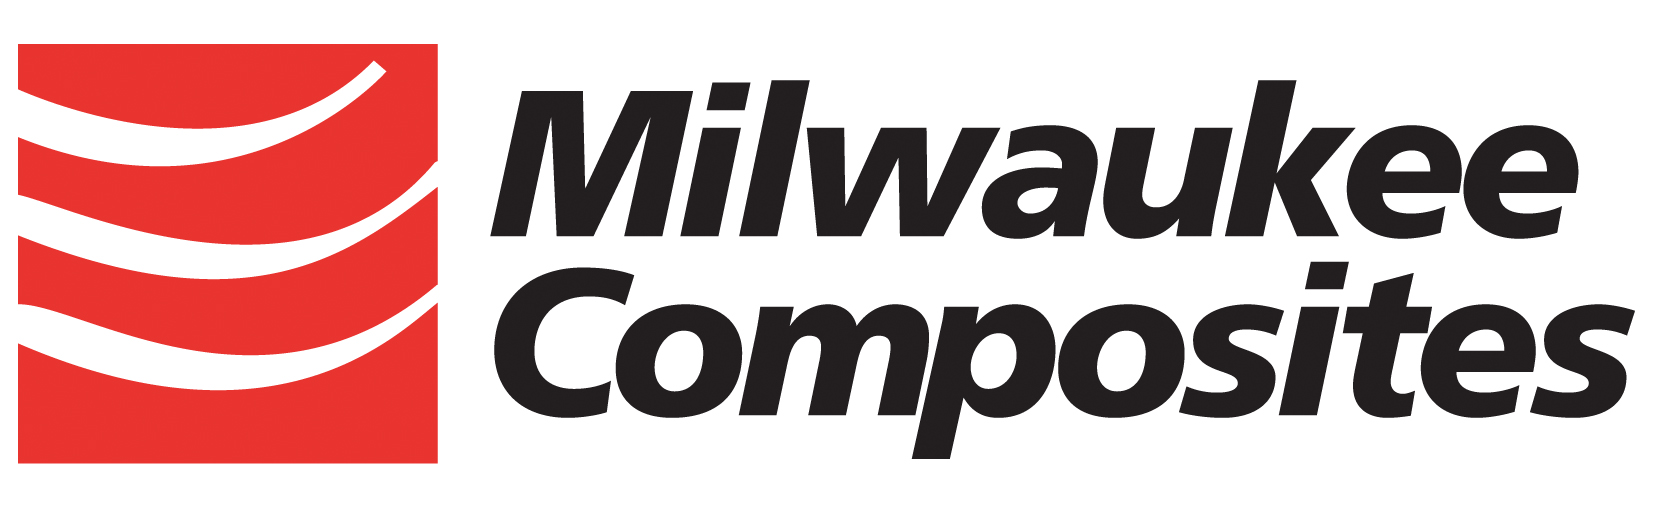 Milwaukee Composites